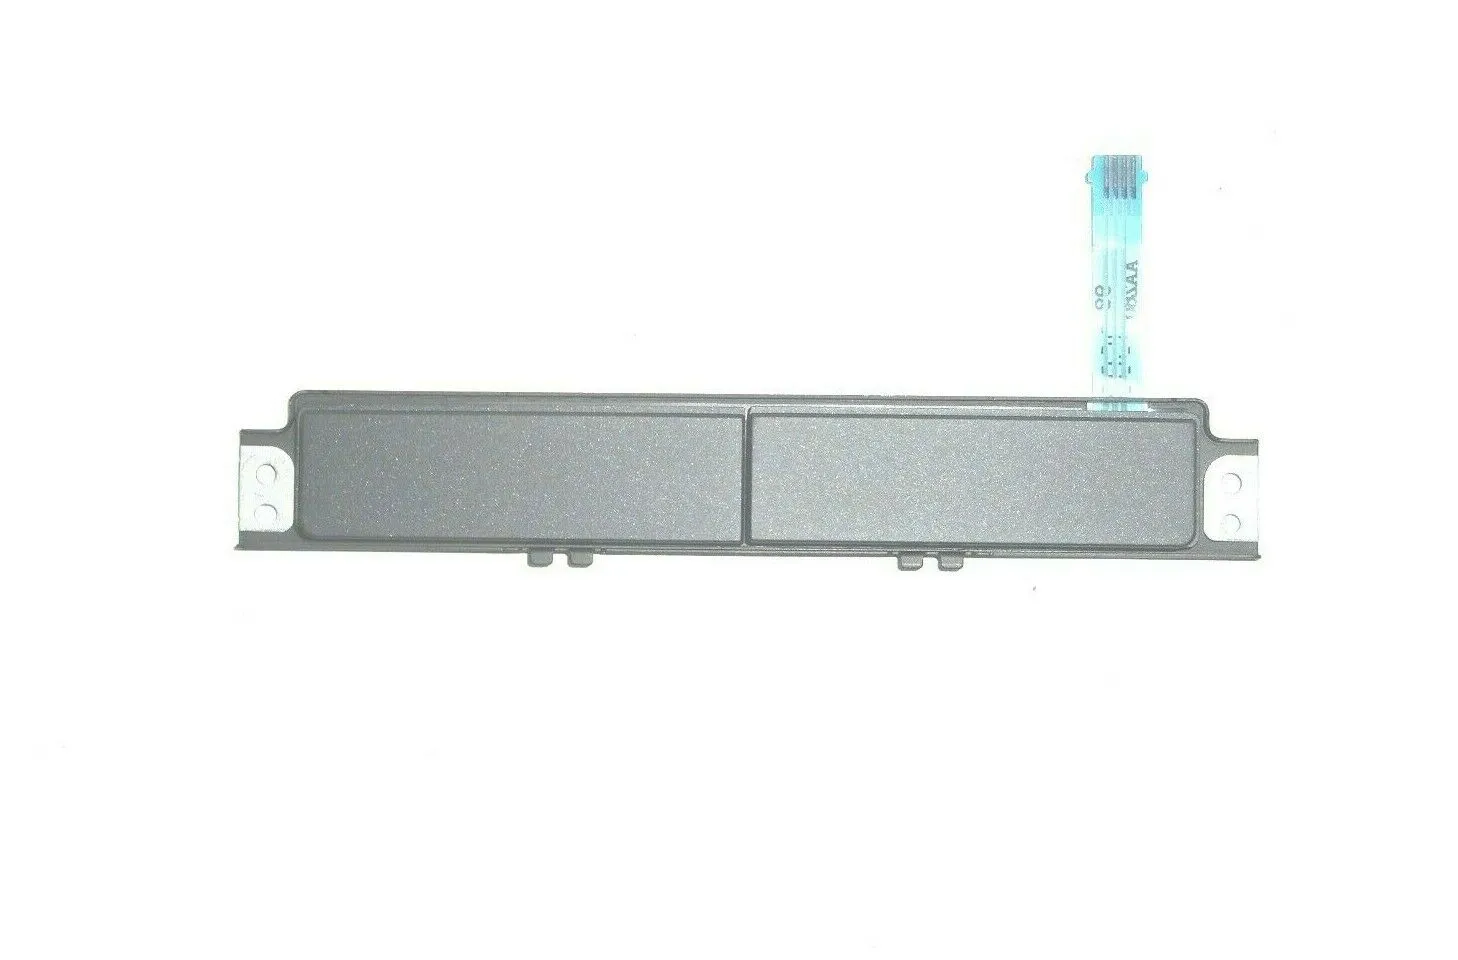 Dell E7470 Dokunmatik Pad için Orijinal Dizüstü Dokunmatik Padde Düğmeler Sol Sağ Düğme LR Düğmesi A151E1 CN-A151E1